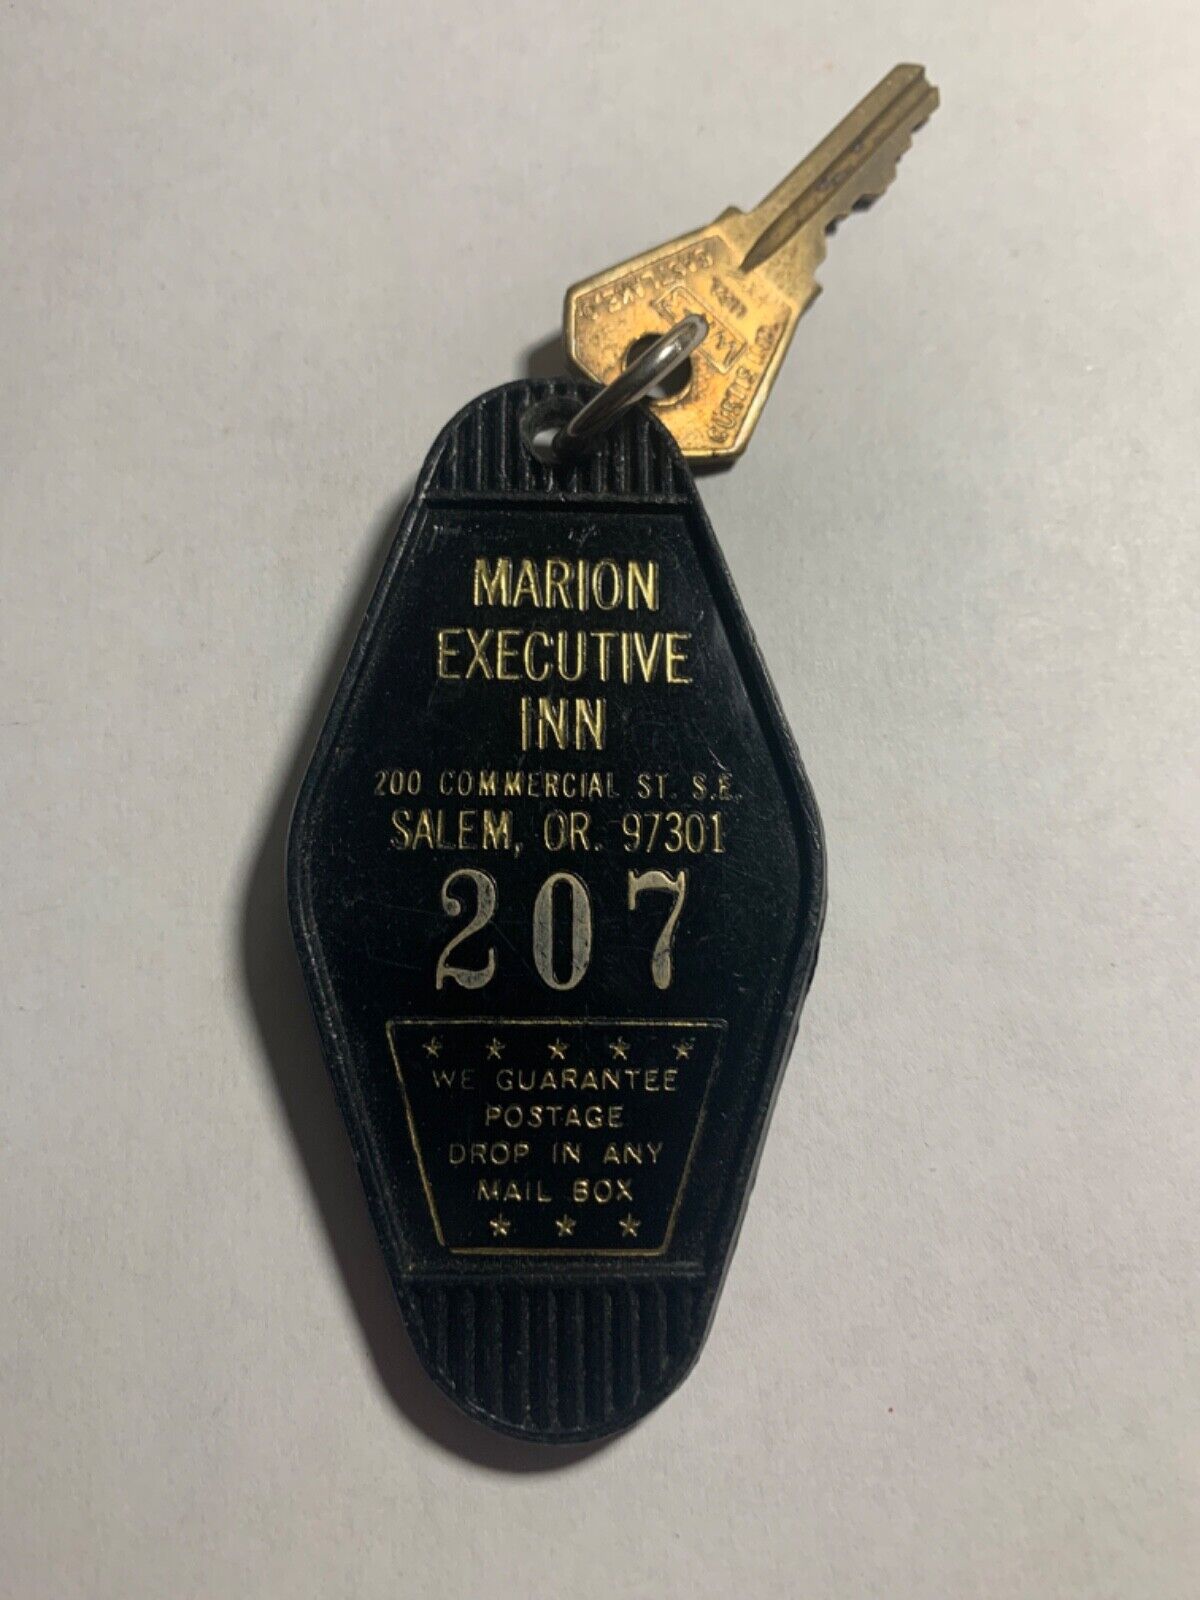 Marion Executive Inn Hotel Motel Room Key Fob & Key Salem Oregon #207